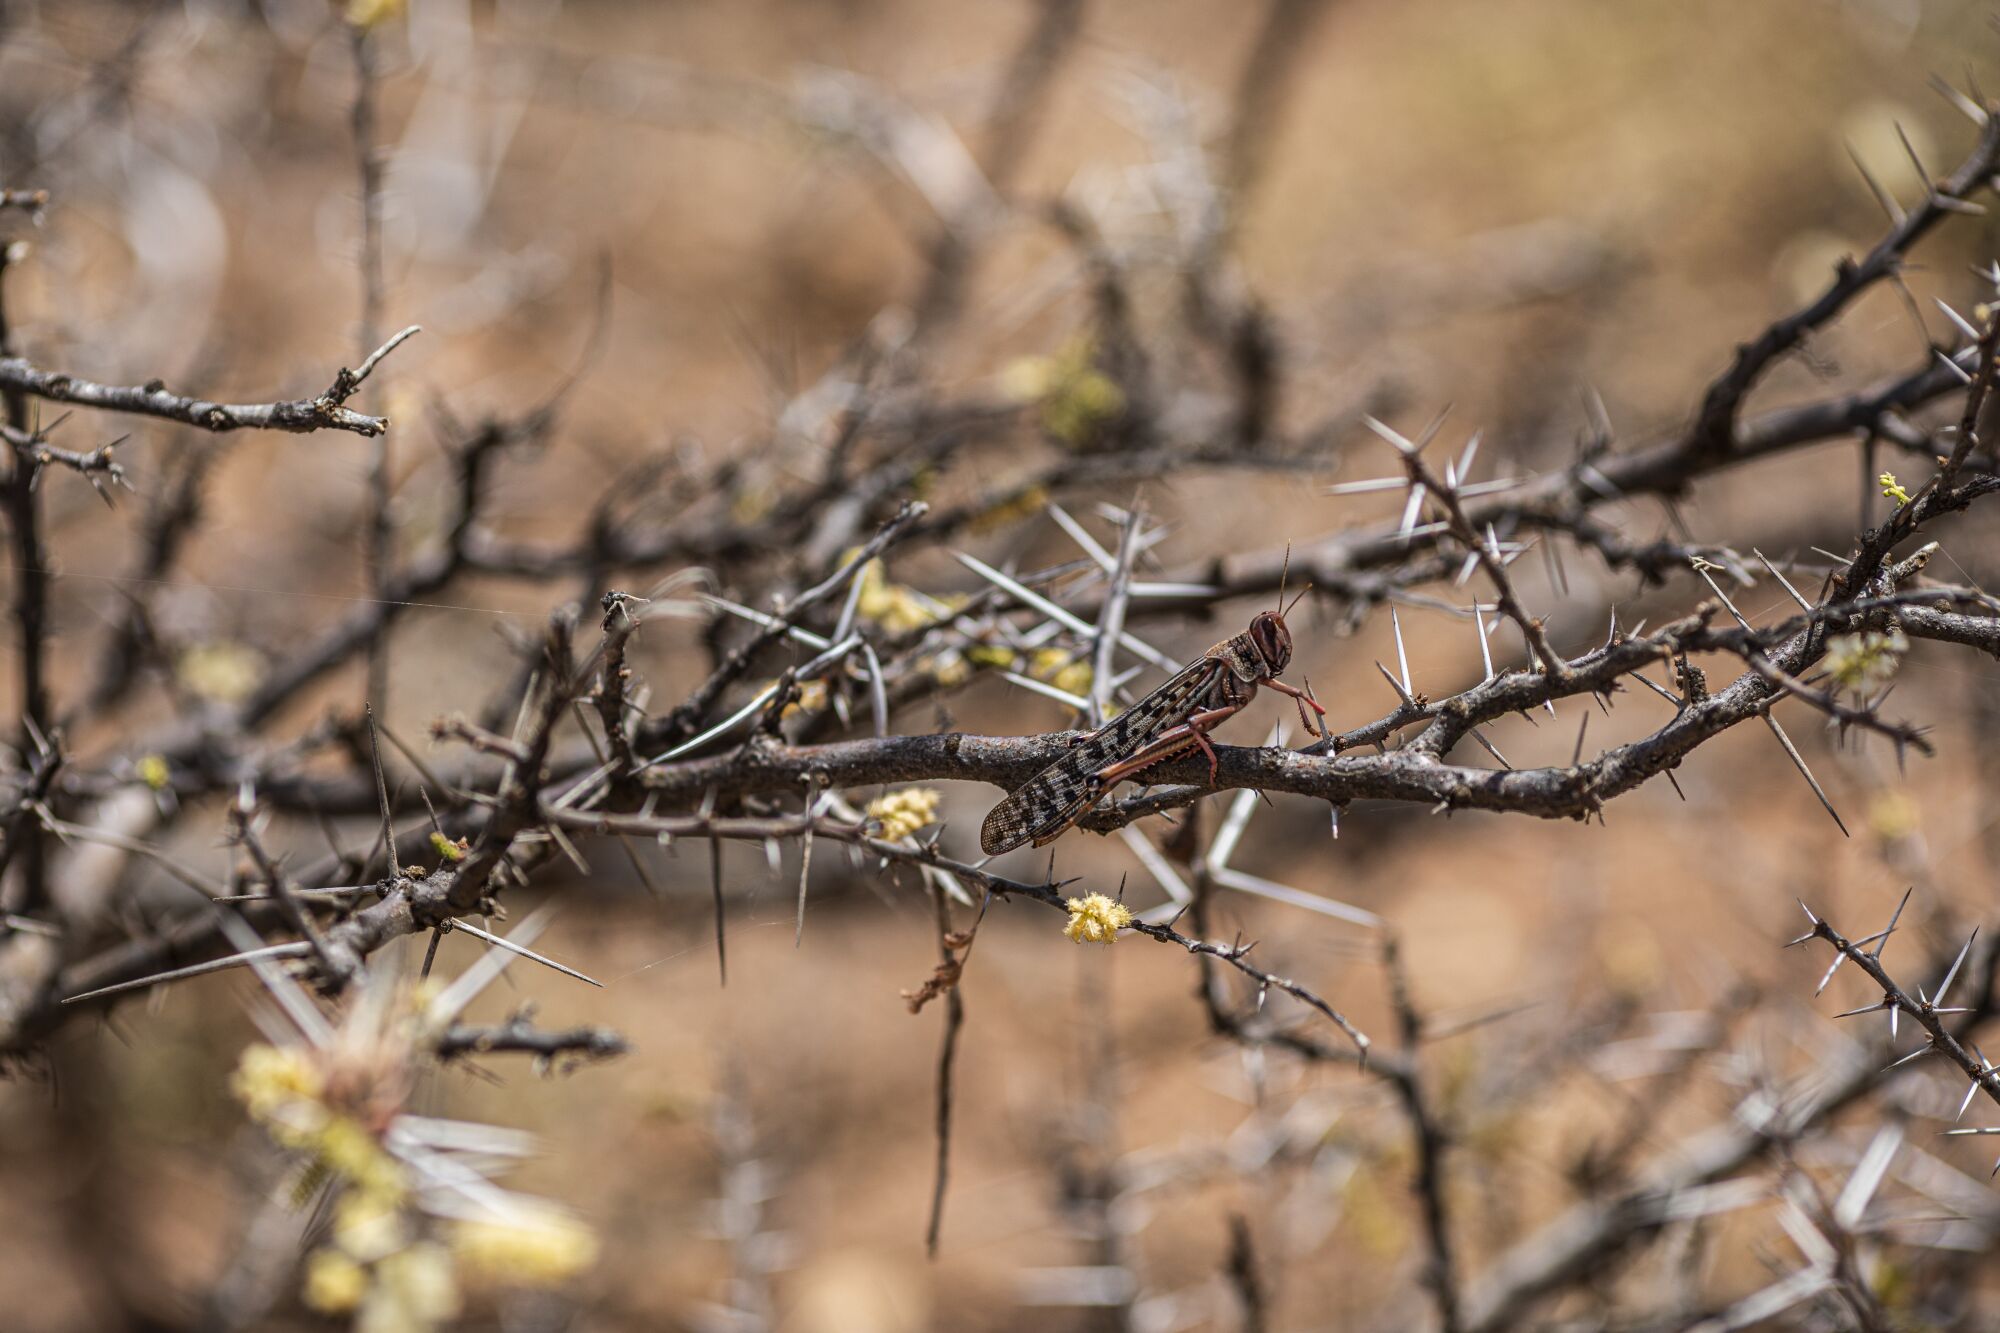 A desert locust sits on the branch of a stripped-bare acacia tree near Sool, Somalia.